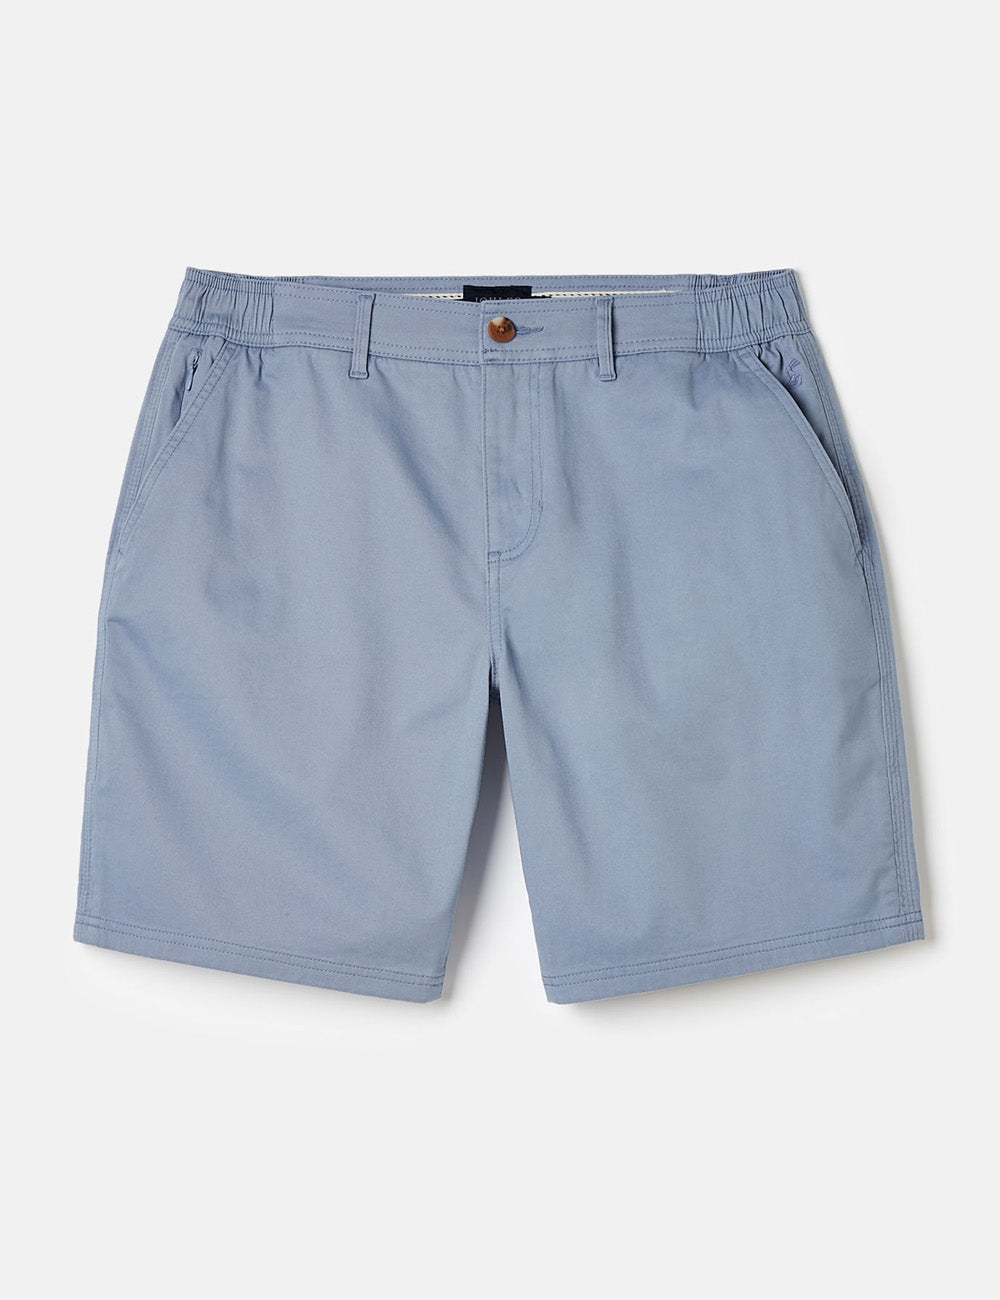 Joules Dockside Shorts - Dutch Blue